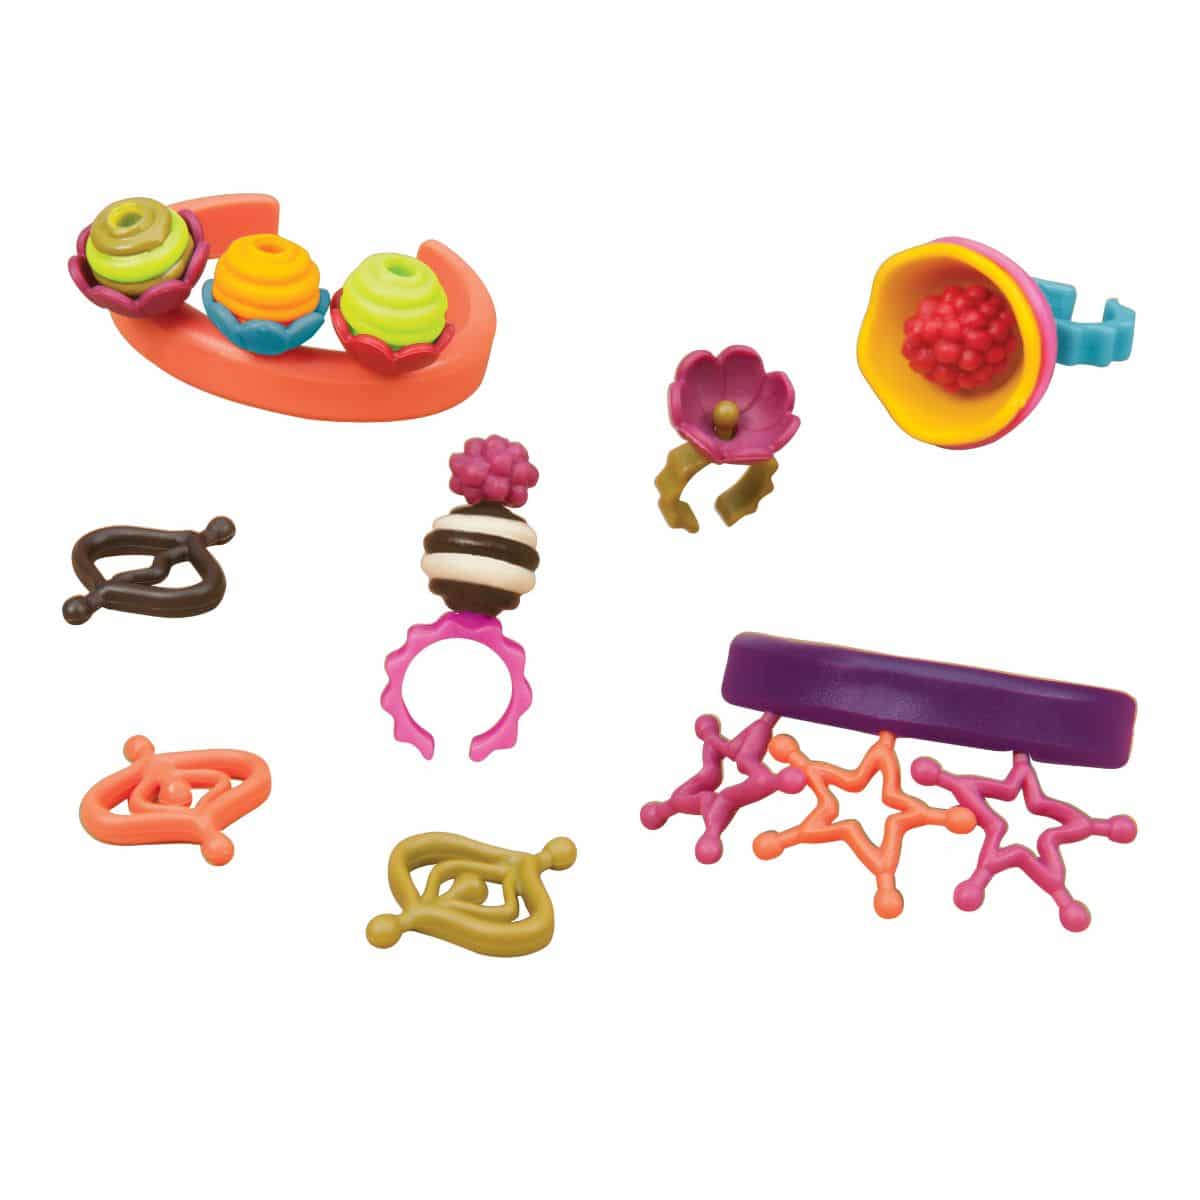 Toy jewellery kit